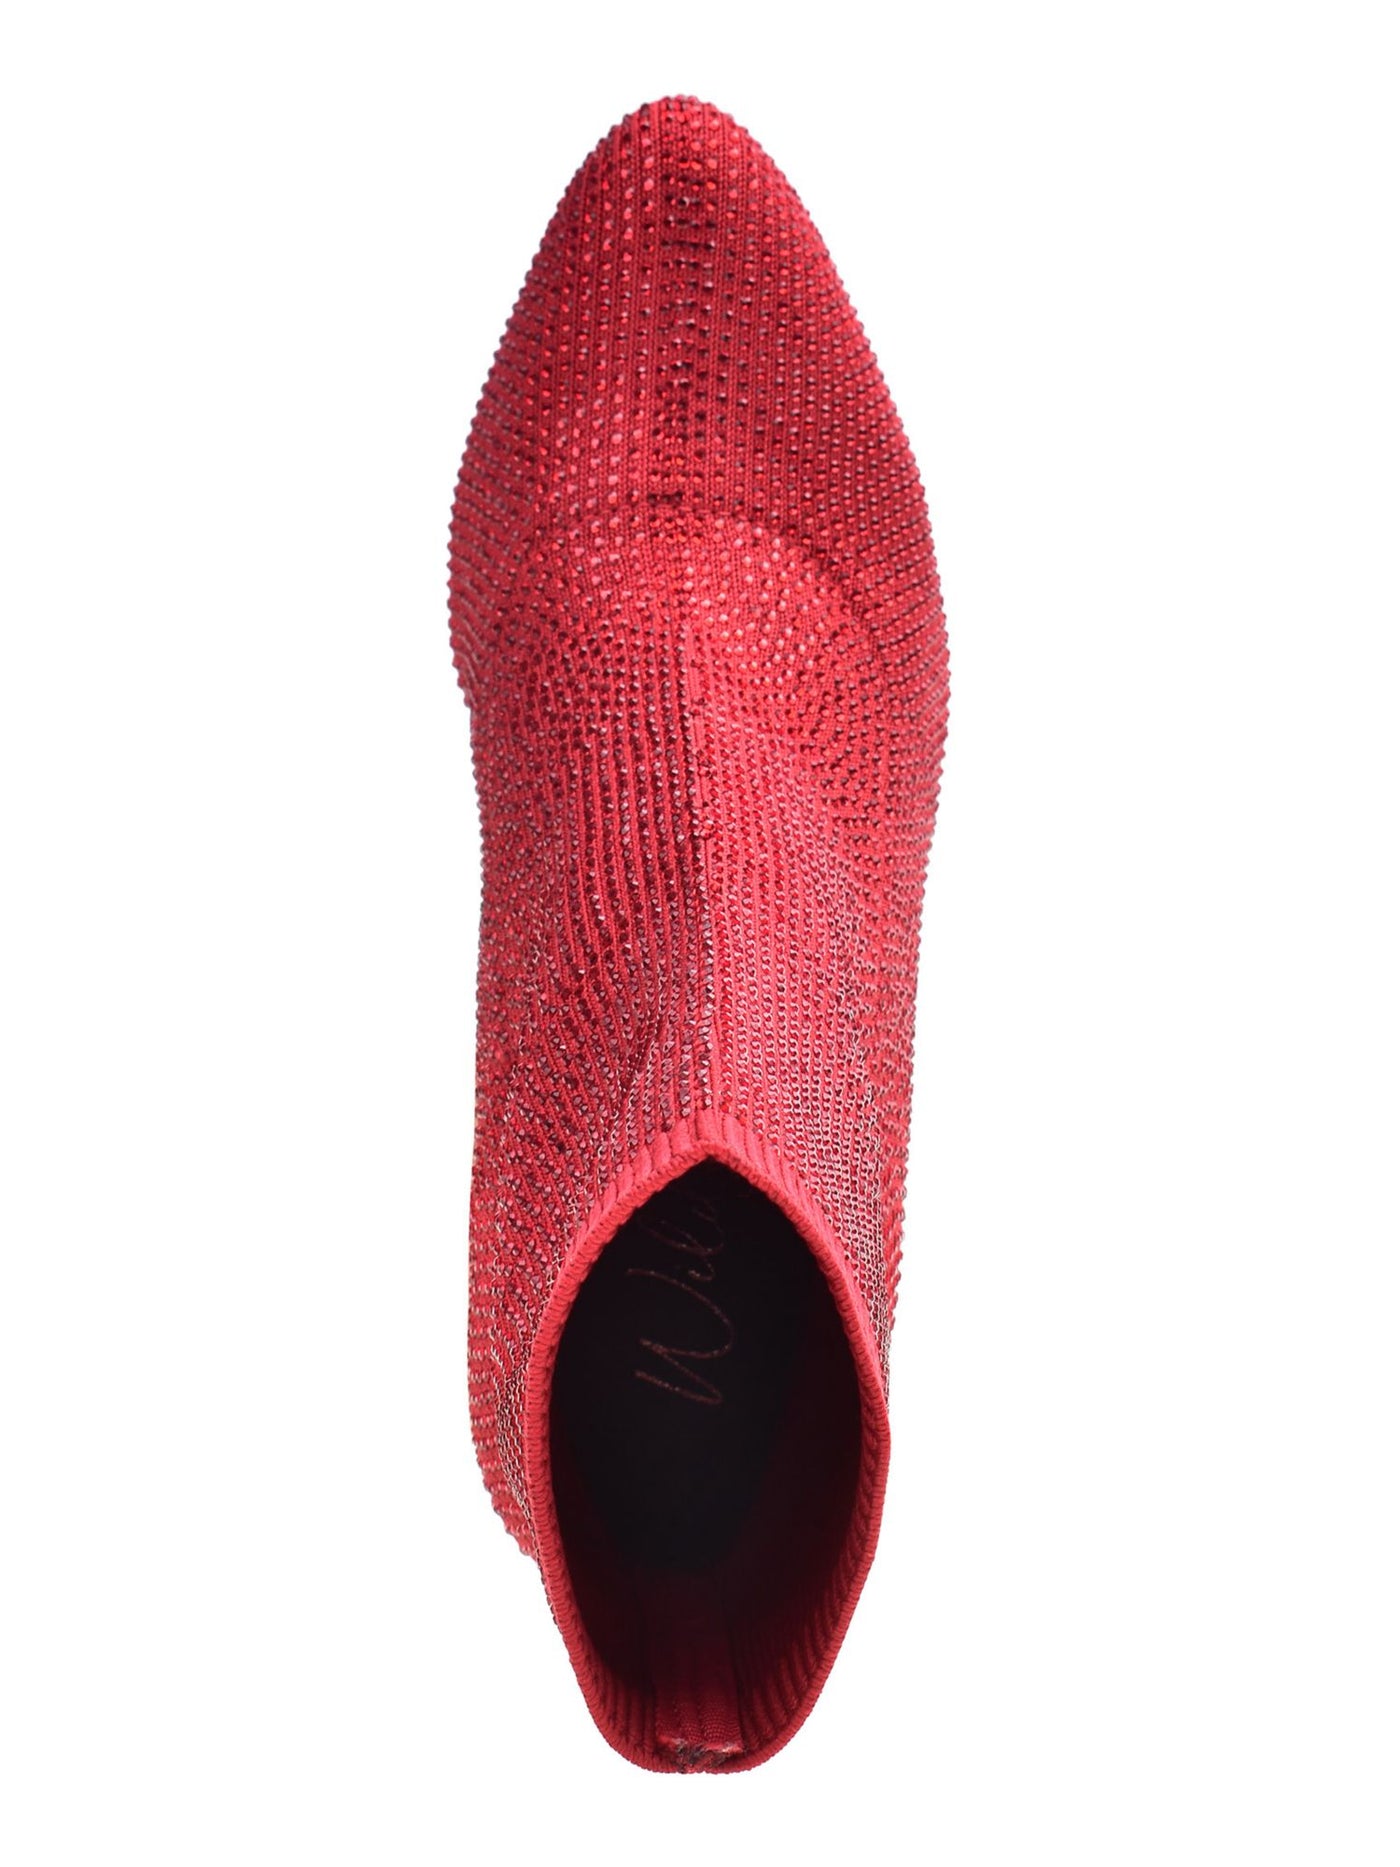 WILD PAIR Womens Red Sock Cushioned Rhinestone Stretch Baybe Pointed Toe Block Heel Booties 8 M